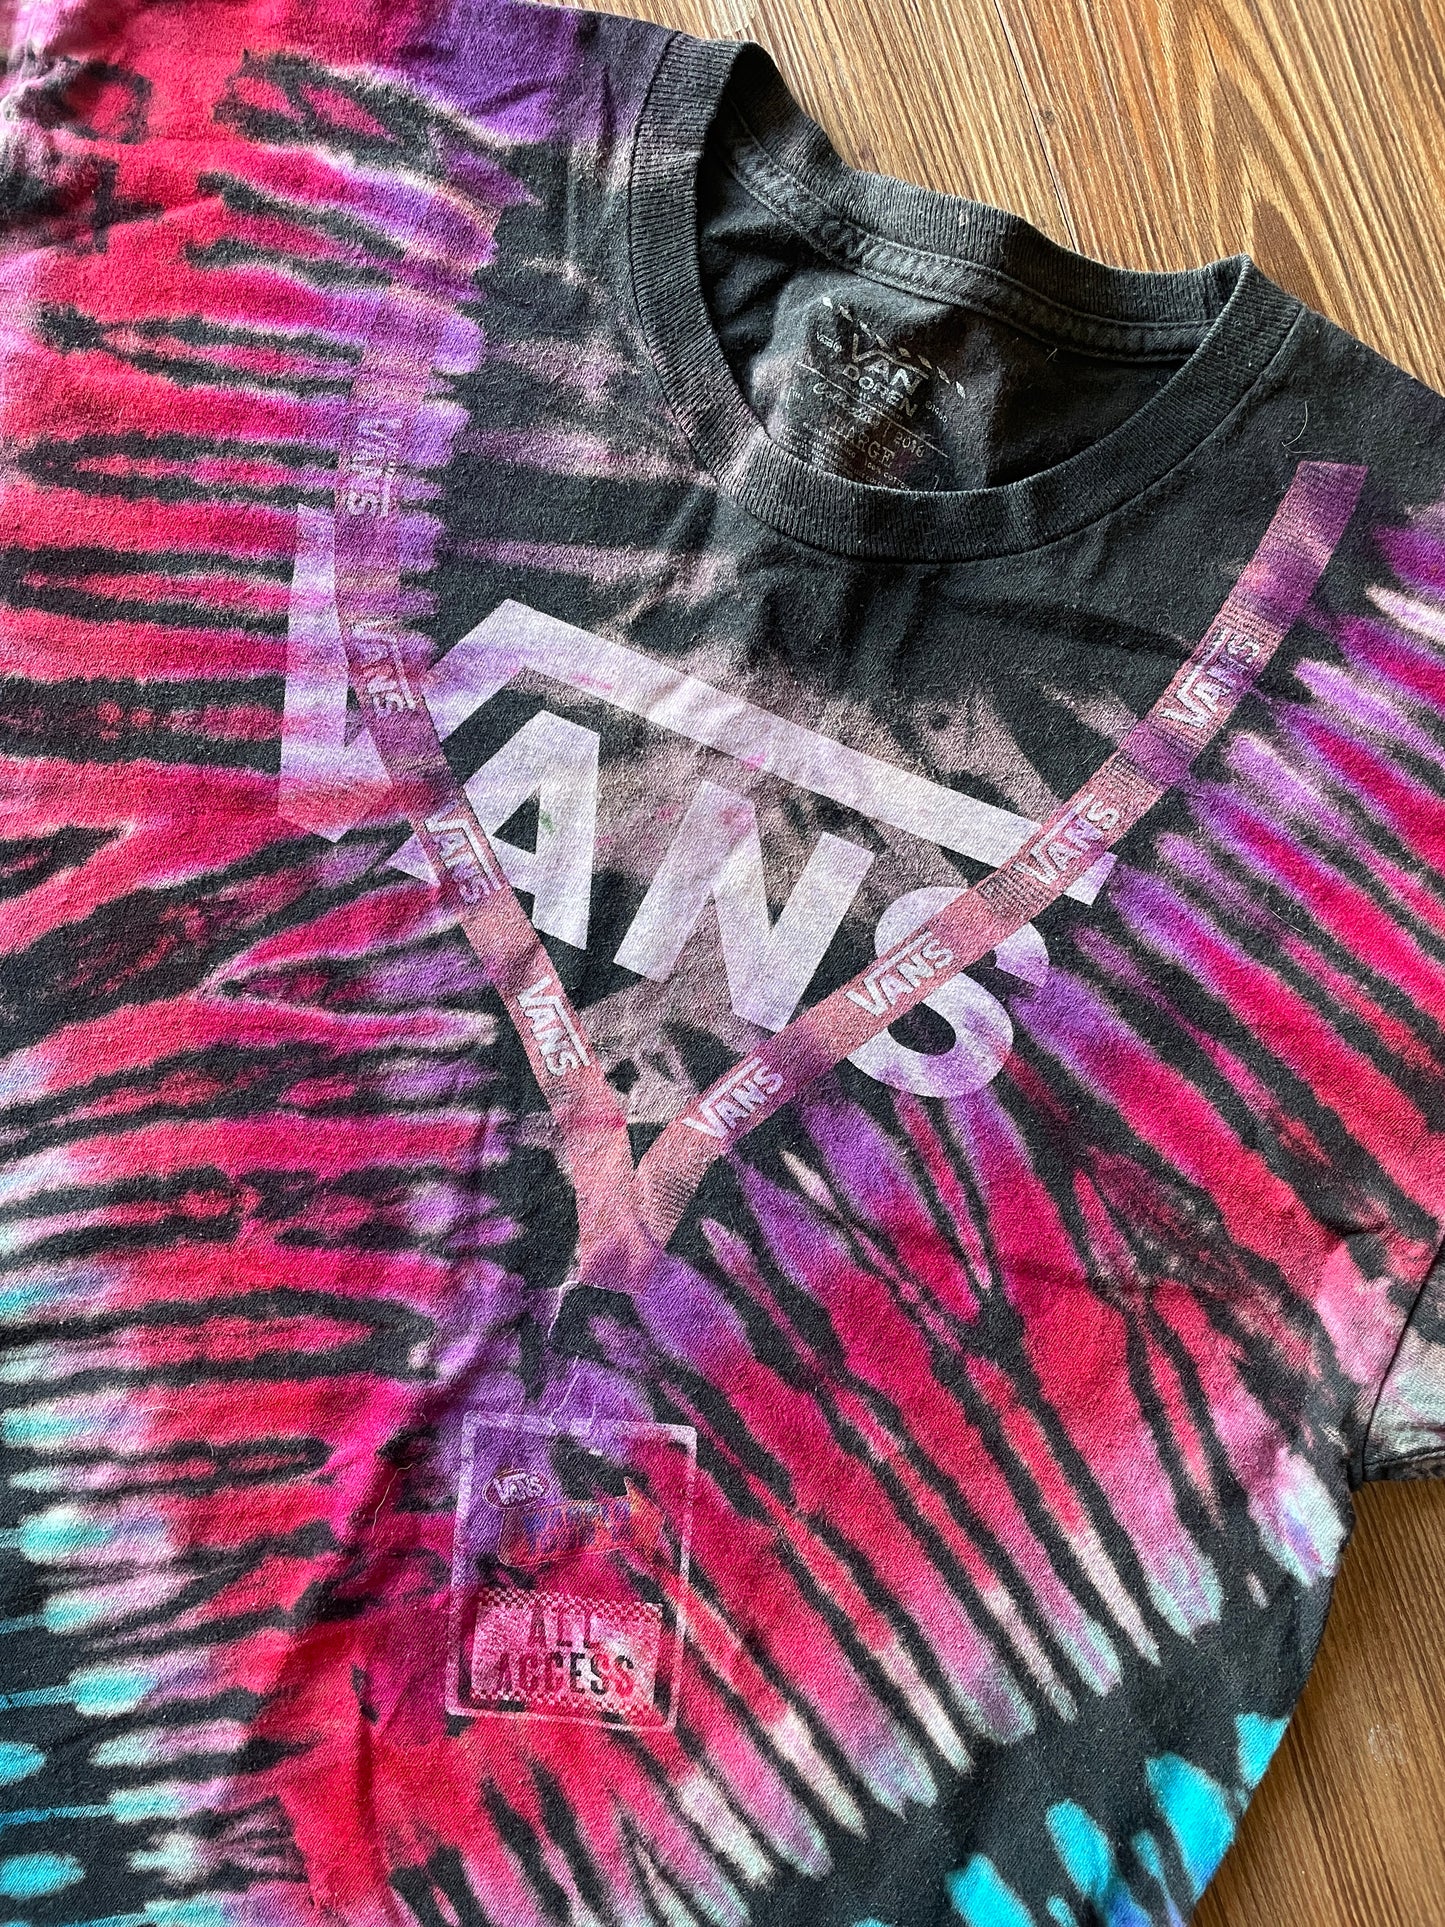 LARGE Men’s 2016 Van’s Warped Tour Tie Dye T-Shirt | Off The Wall All Access Pass Reverse Tie Dye Short Sleeve